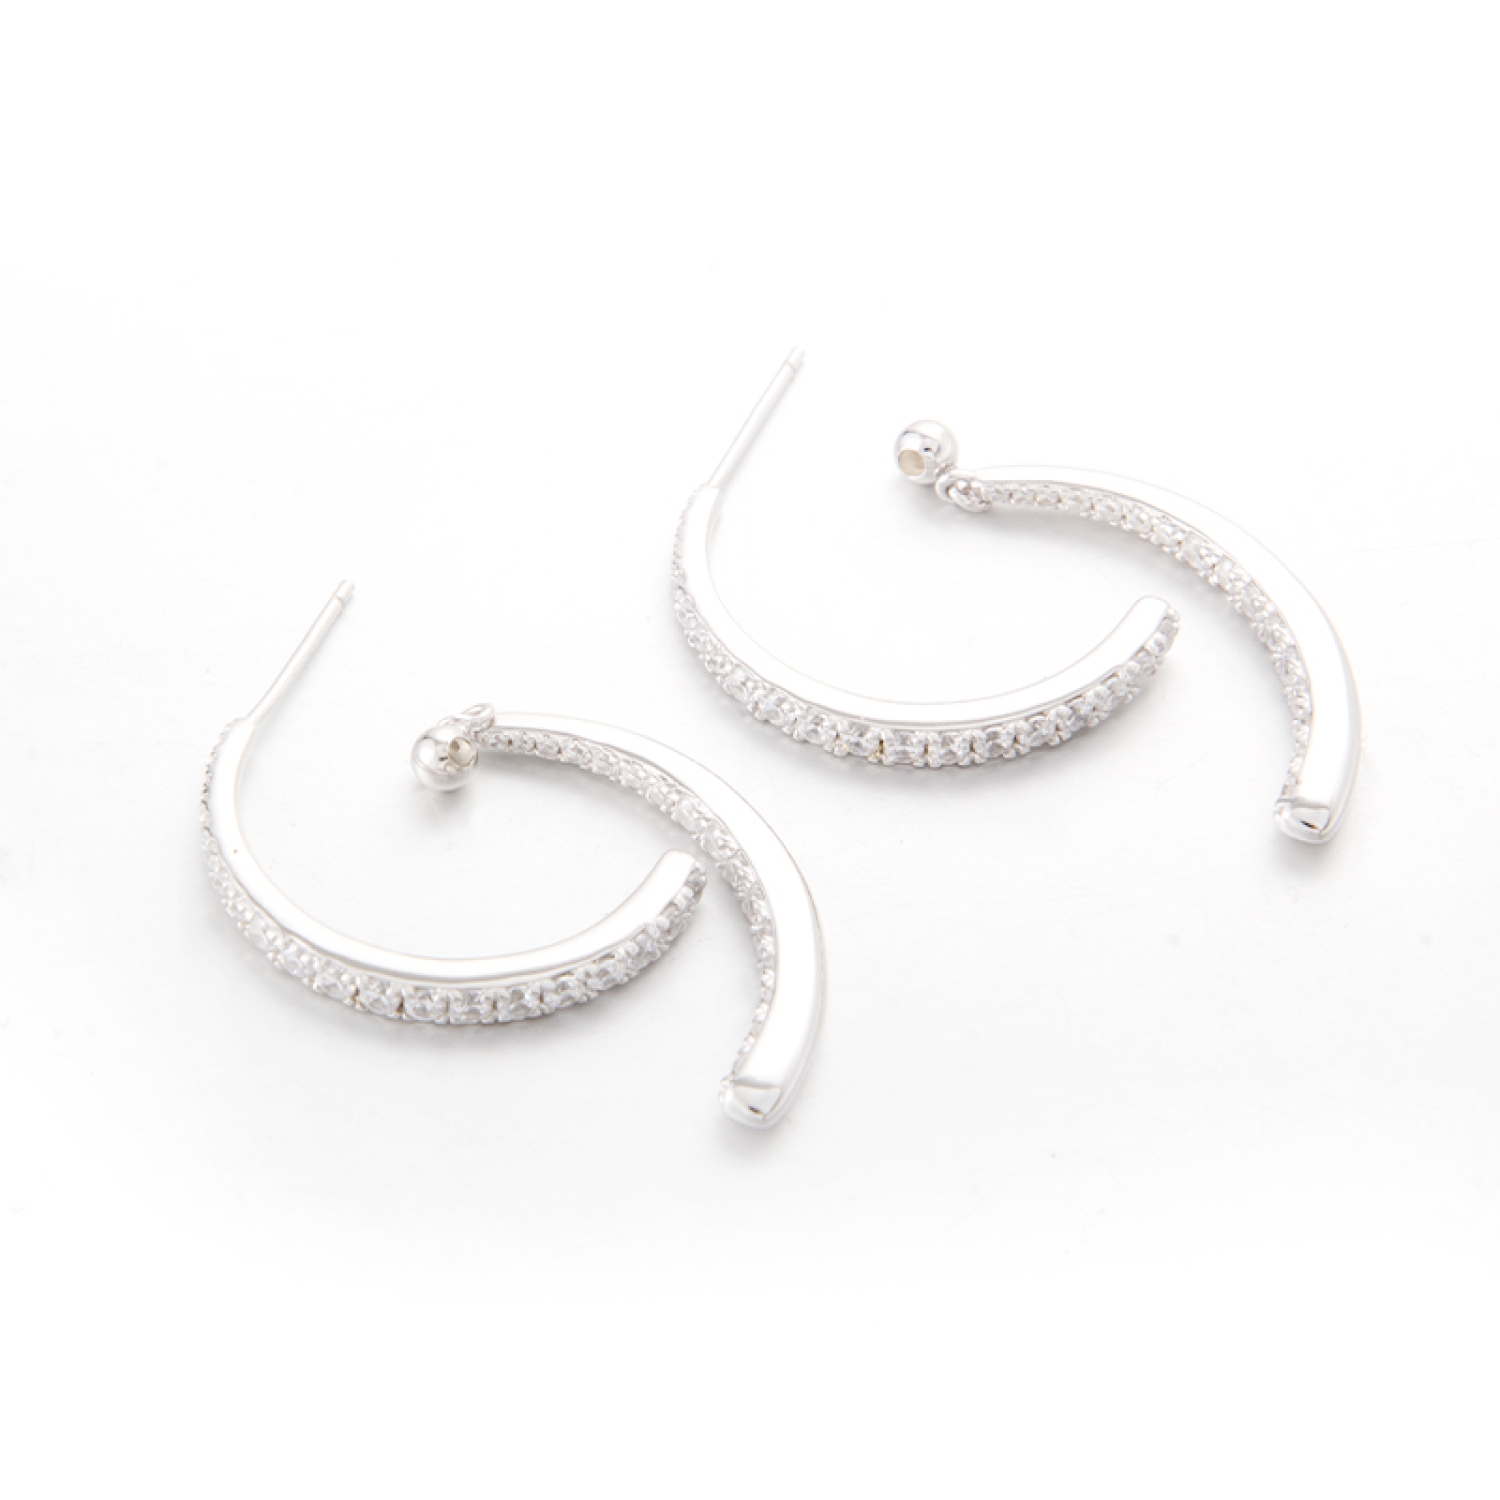 crystal design Crystal stud earring fitting dual-way wear in 925 sterling silver